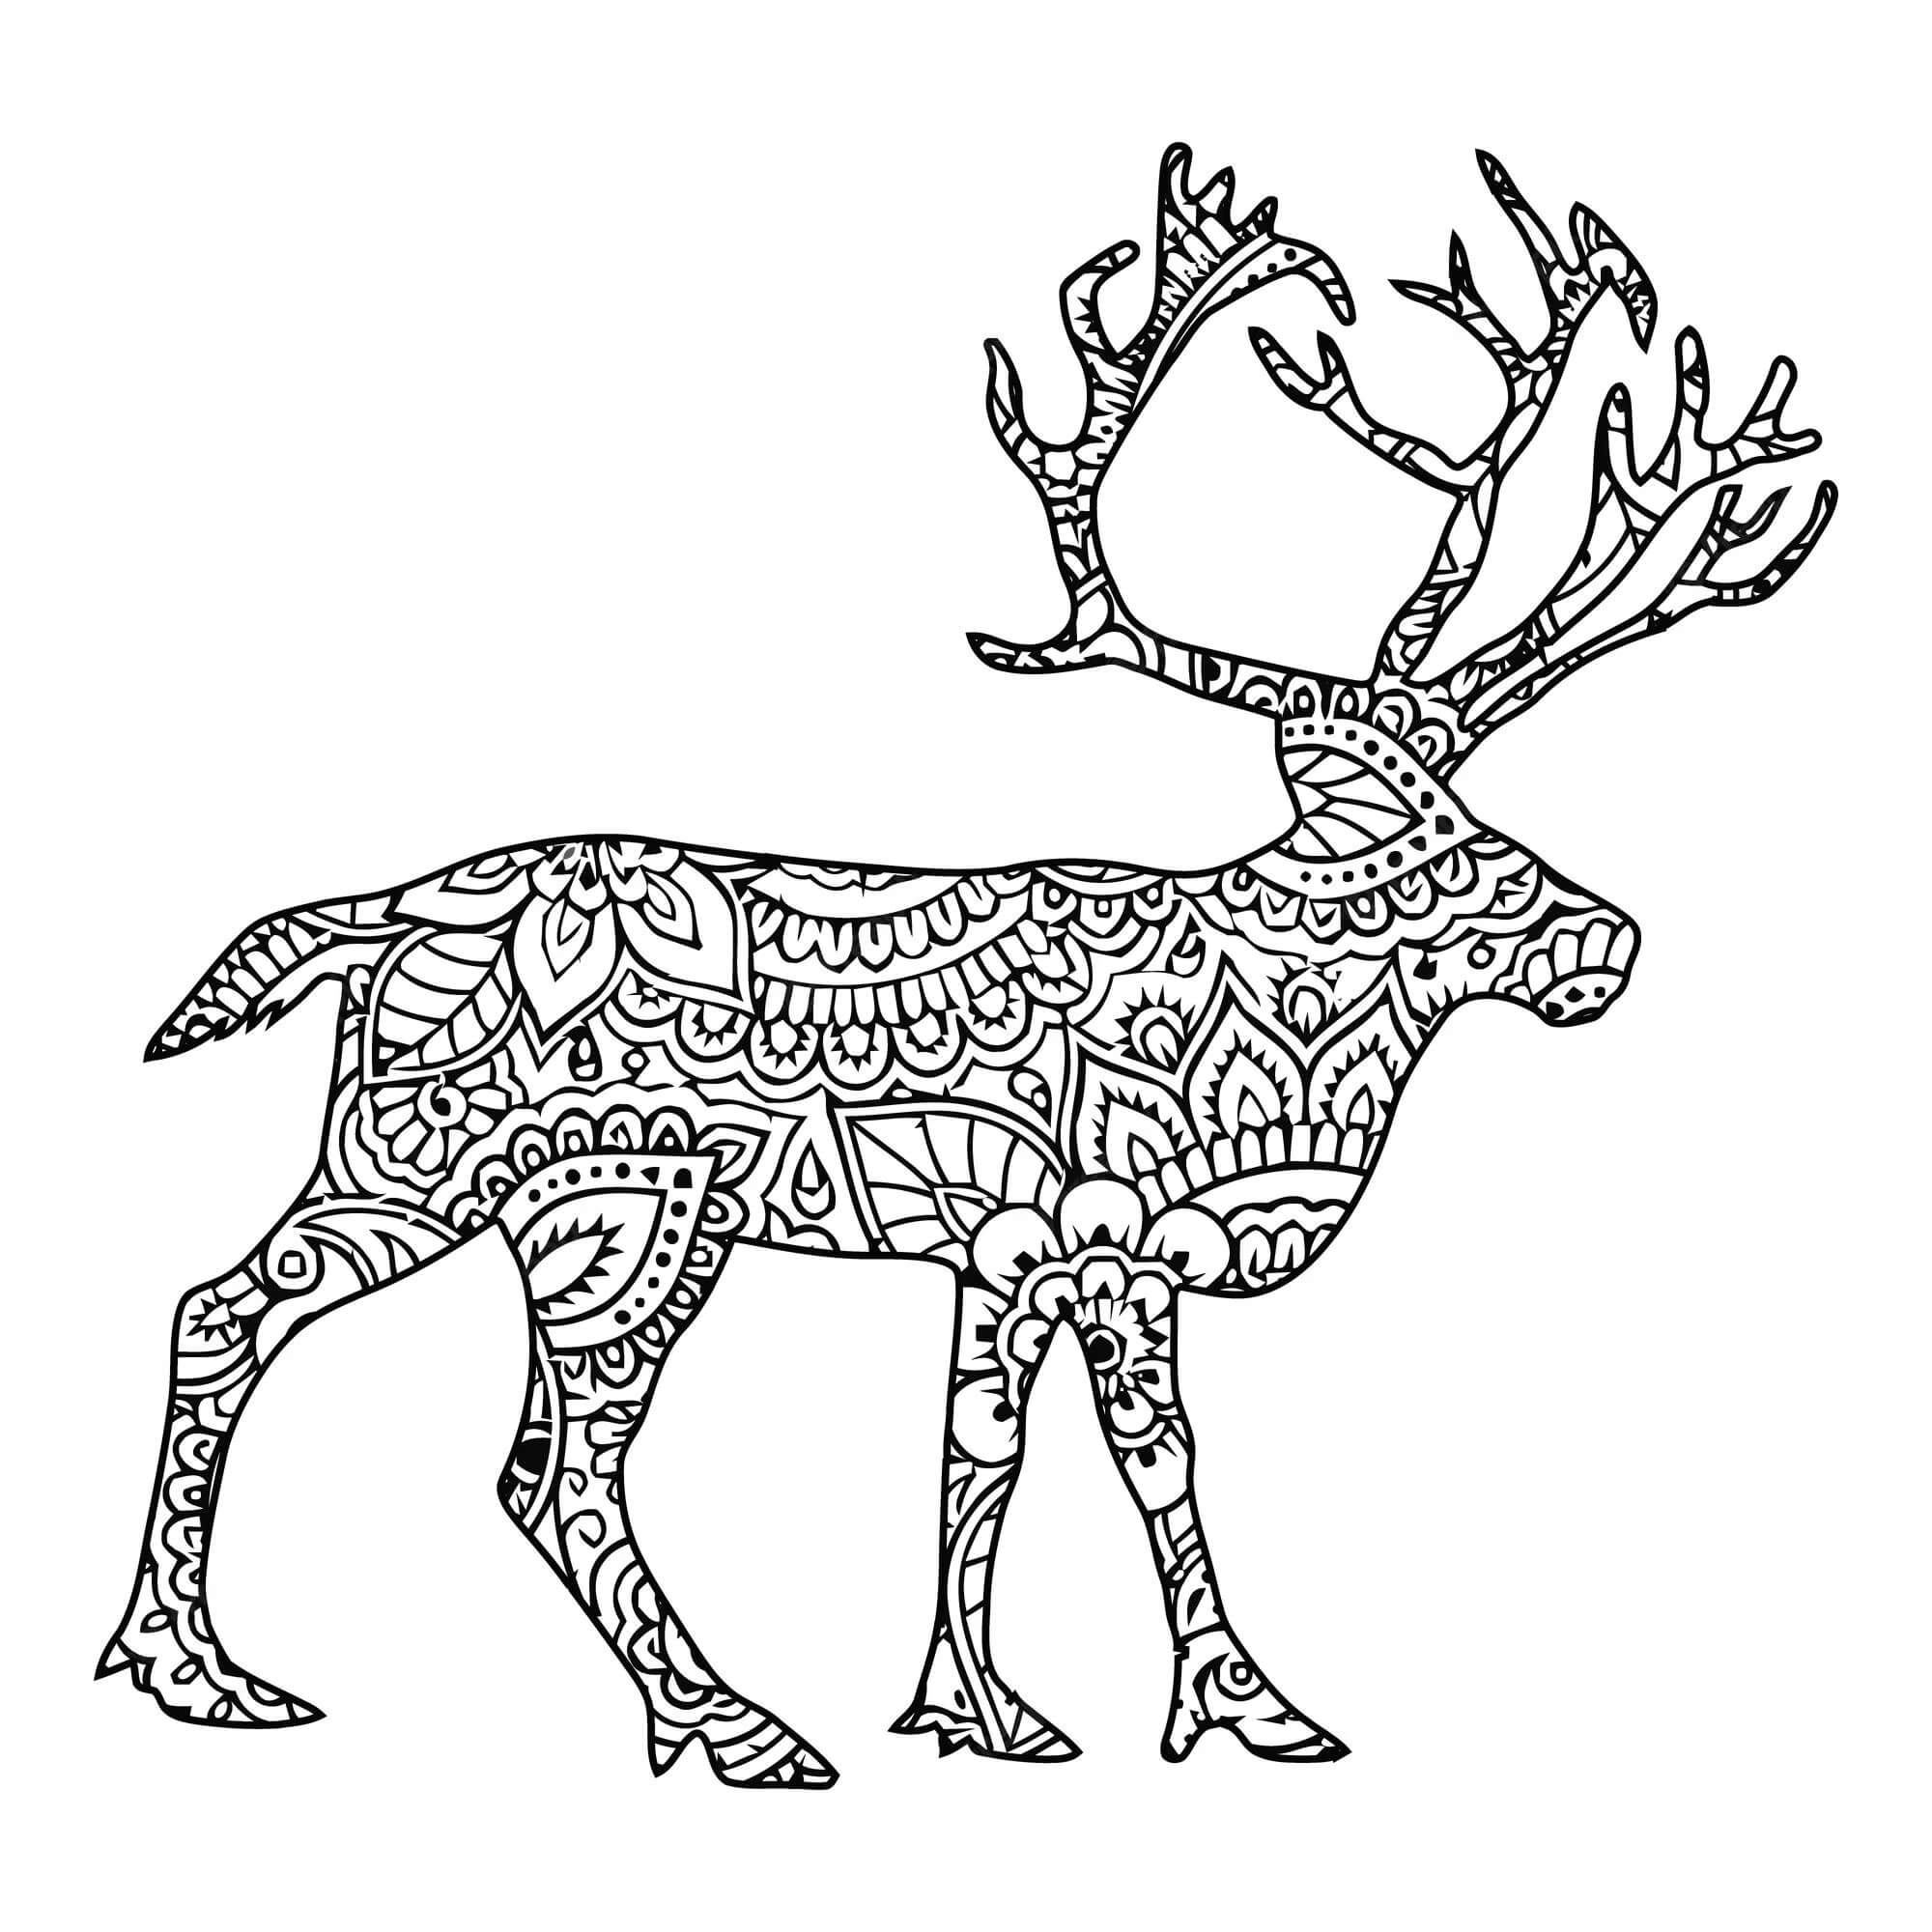 Mandala Deer Coloring Page - Sheet 1 Mandalas